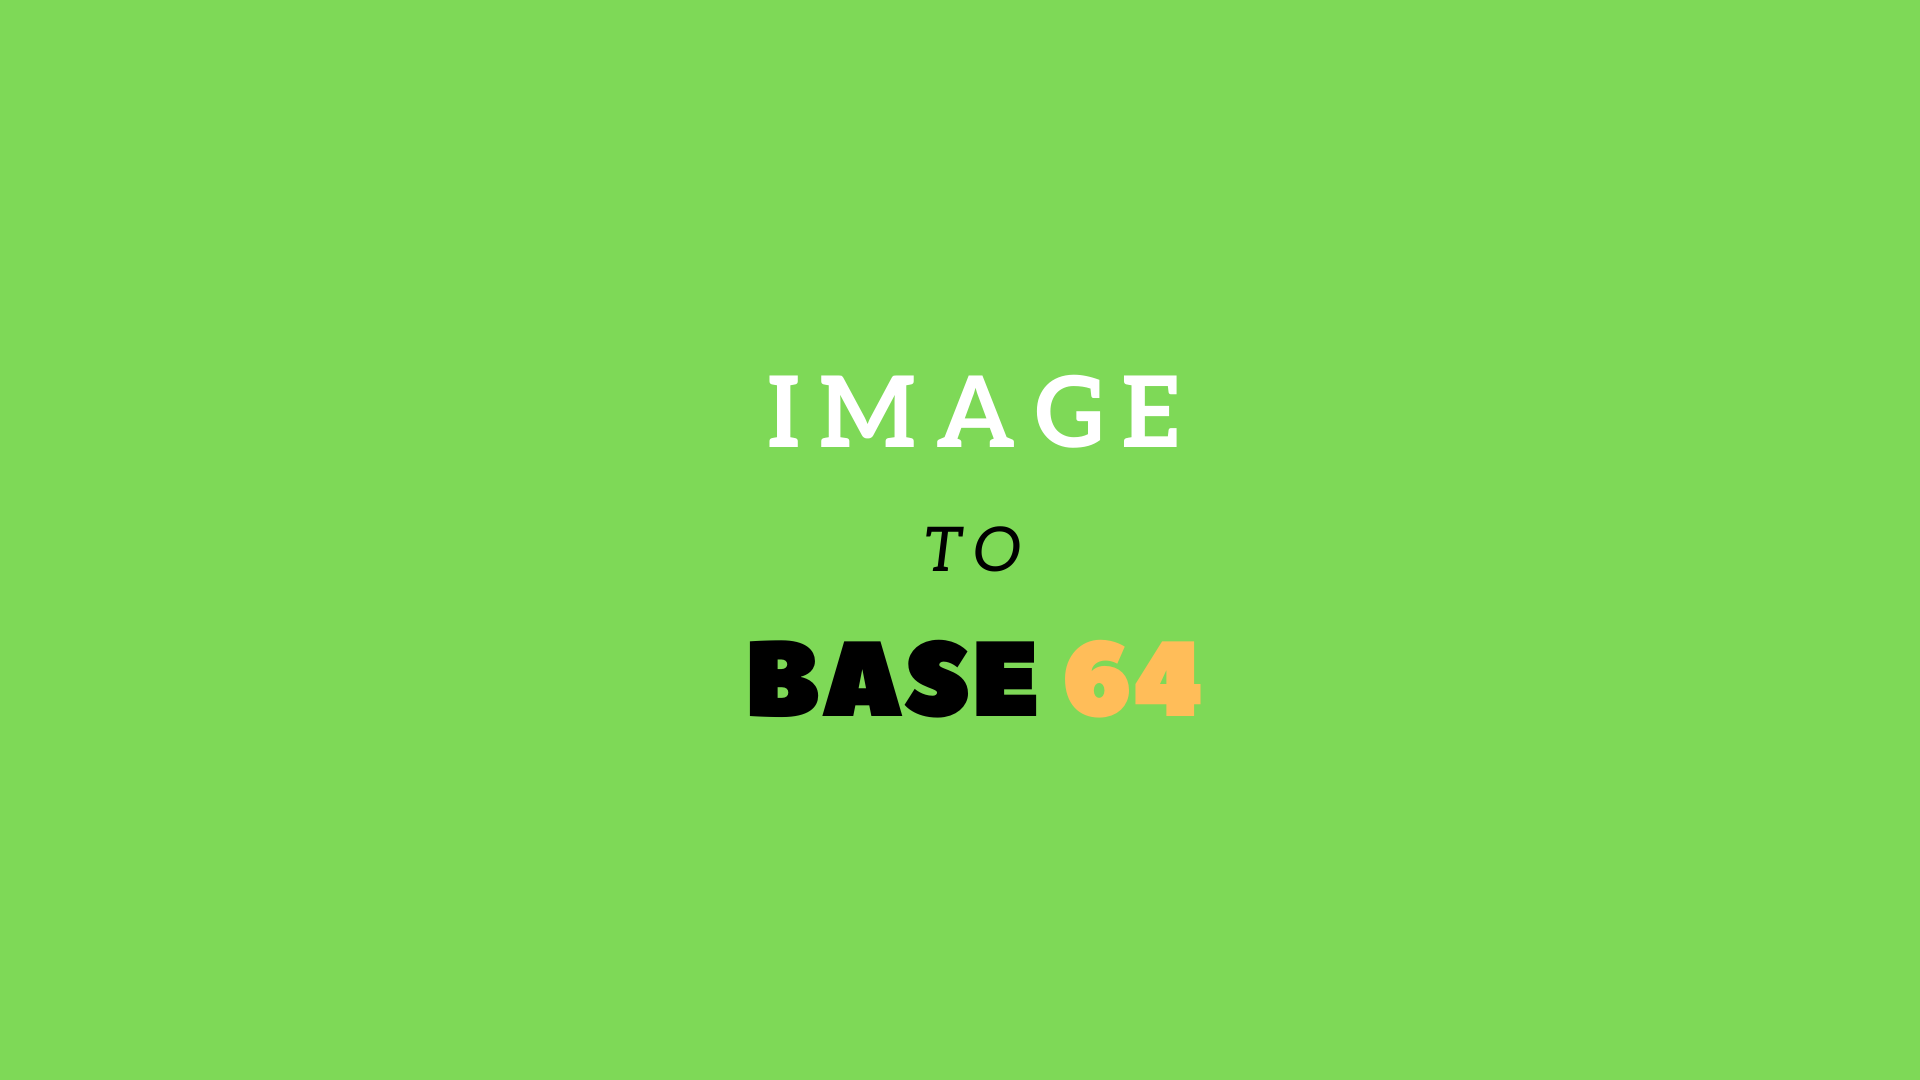 Image / Video to Base 64 Encoding format converter tool